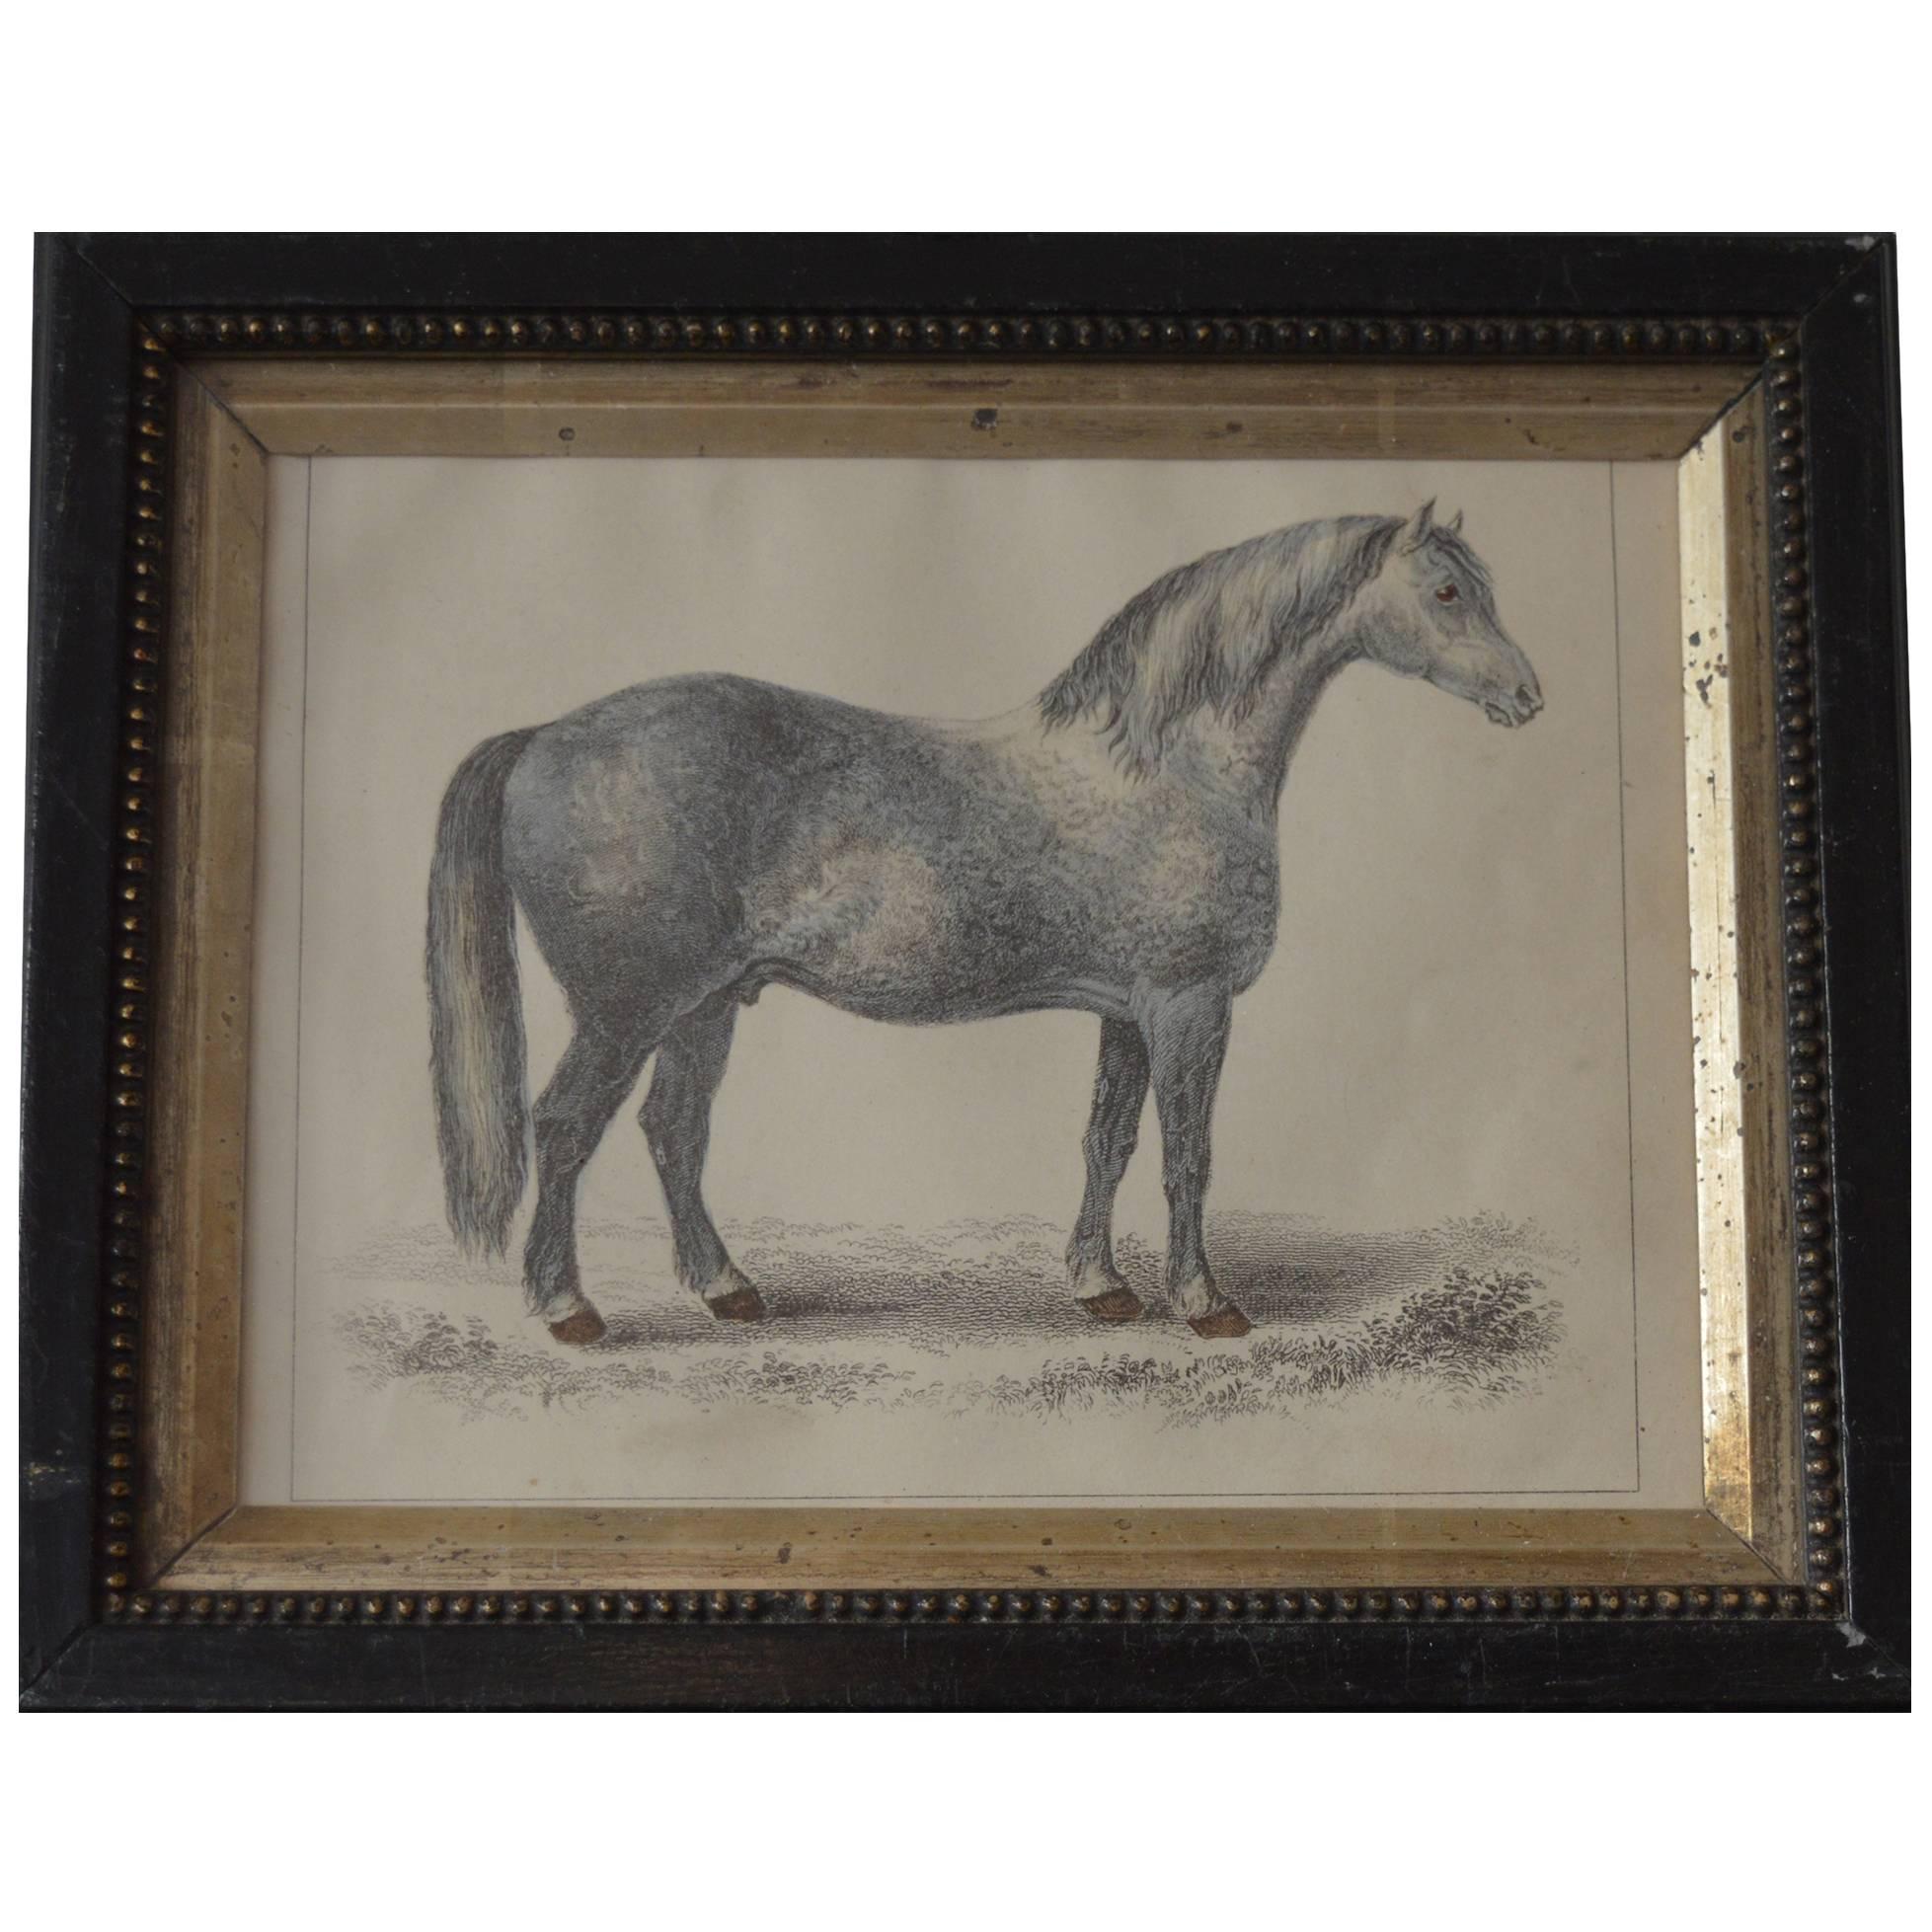 Original Antique Print of a Horse (Grey) circa 1850